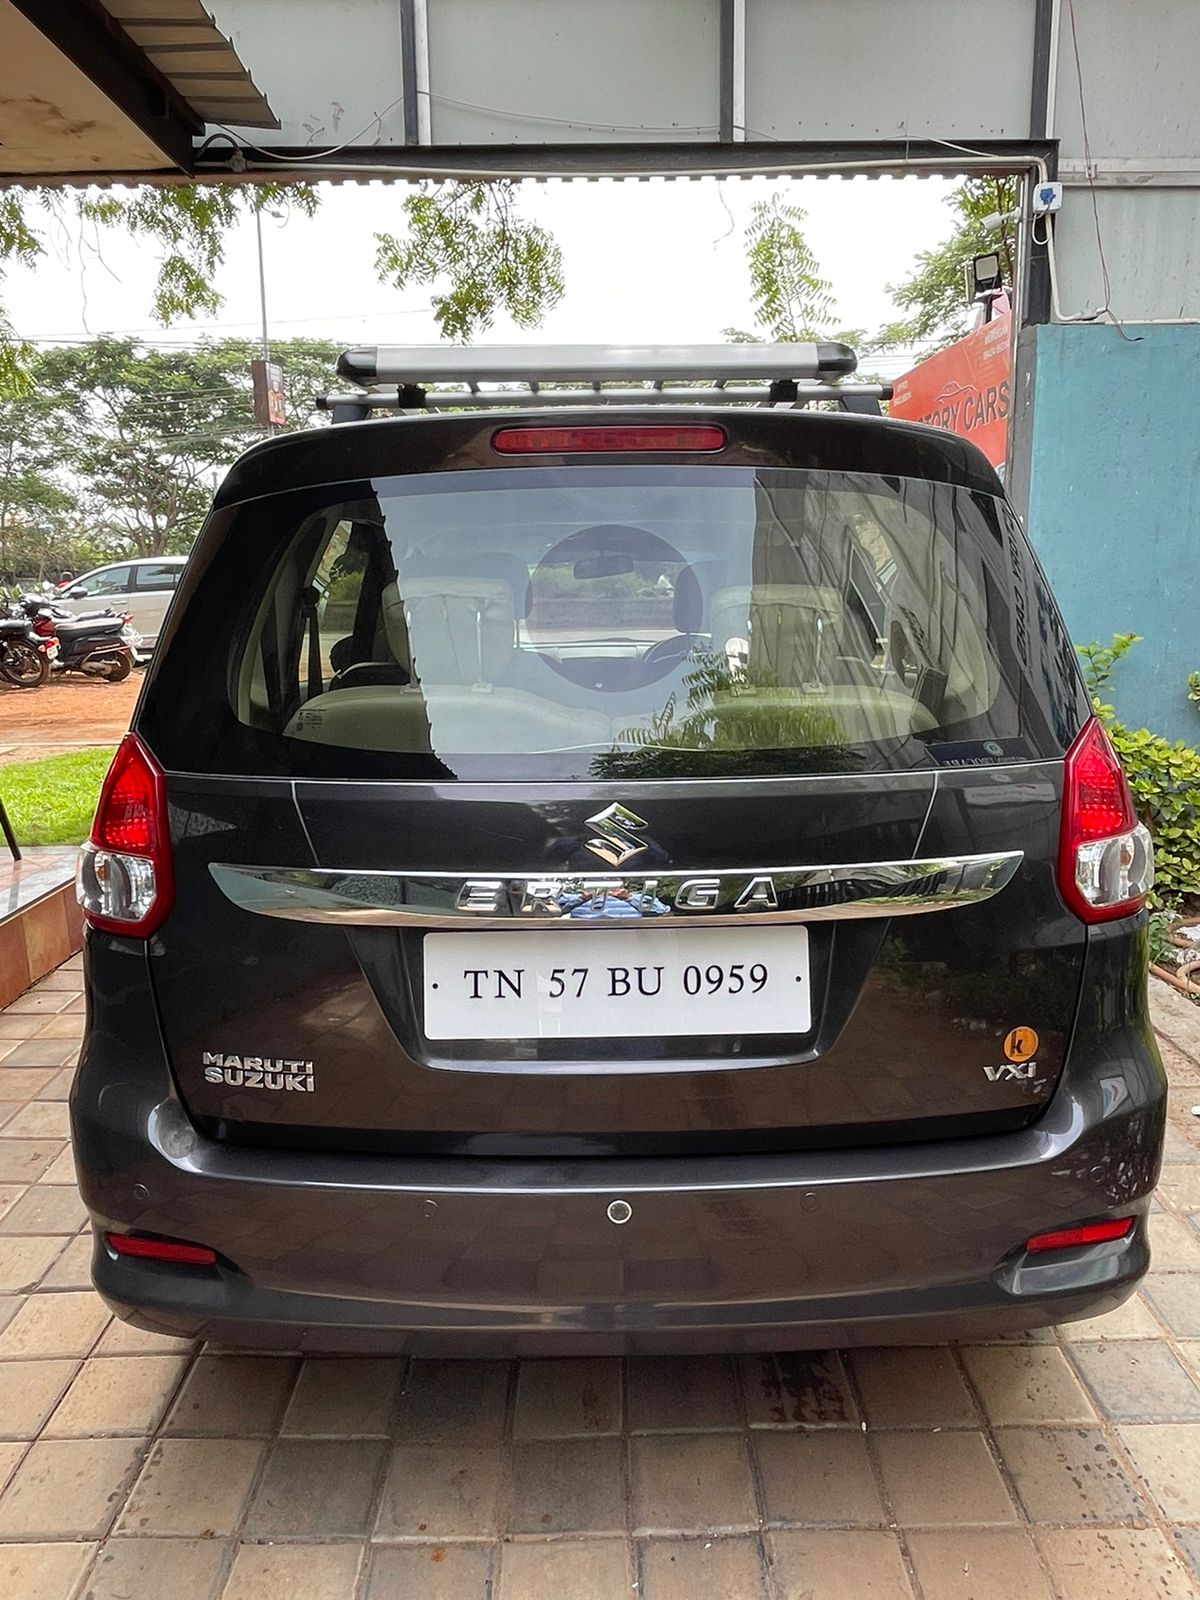 3700-for-sale-Maruthi-Suzuki-Ertiga-Petrol-First-Owner-2018-TN-registered-rs-0